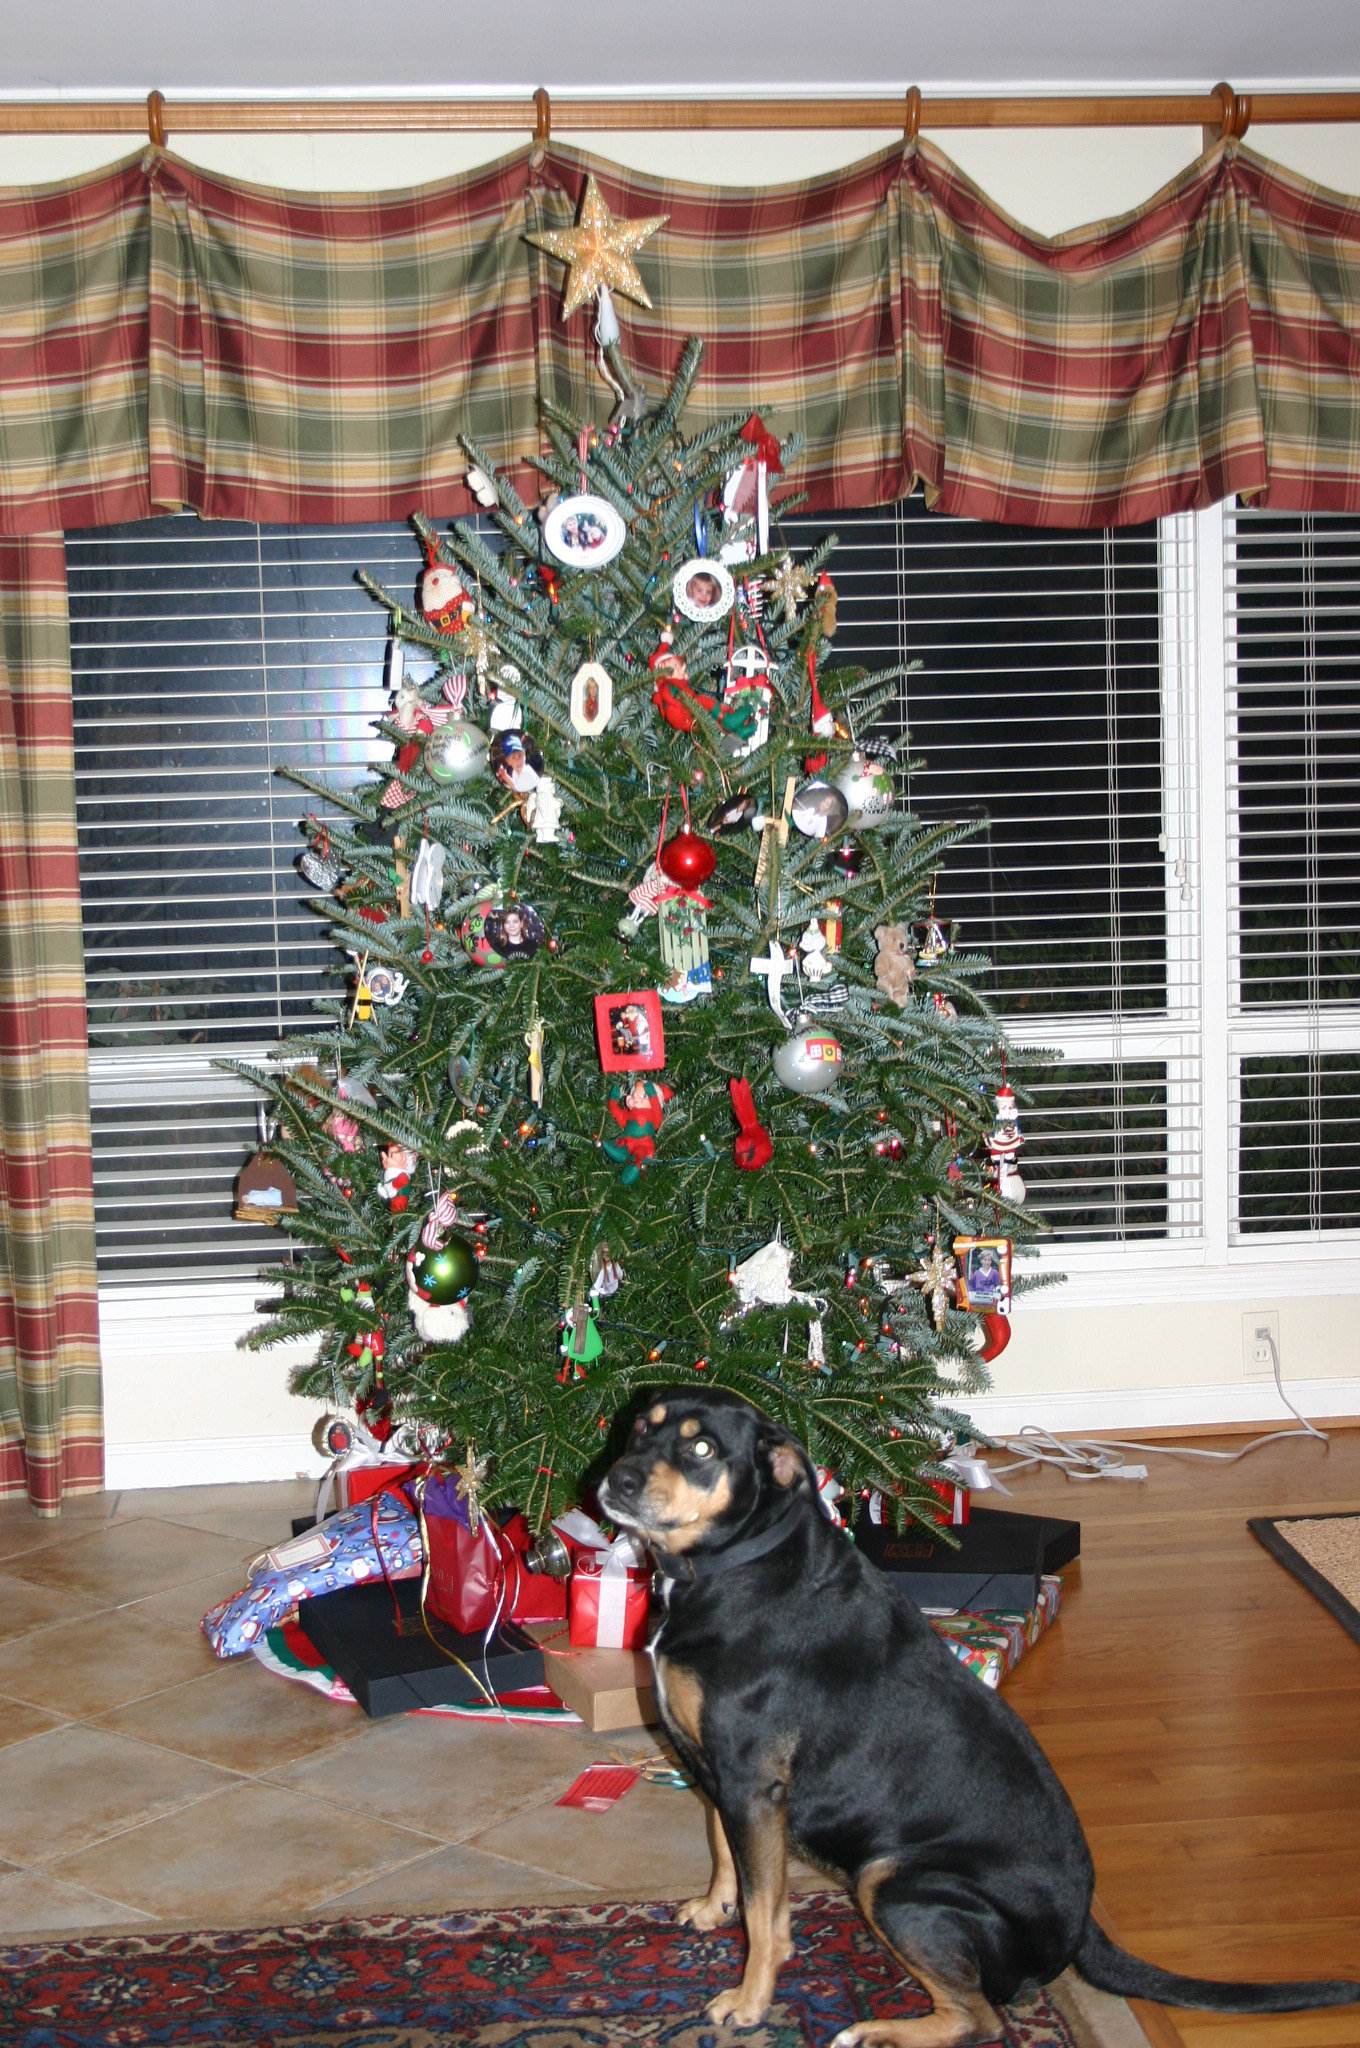 even dogs enjoy Christmas!